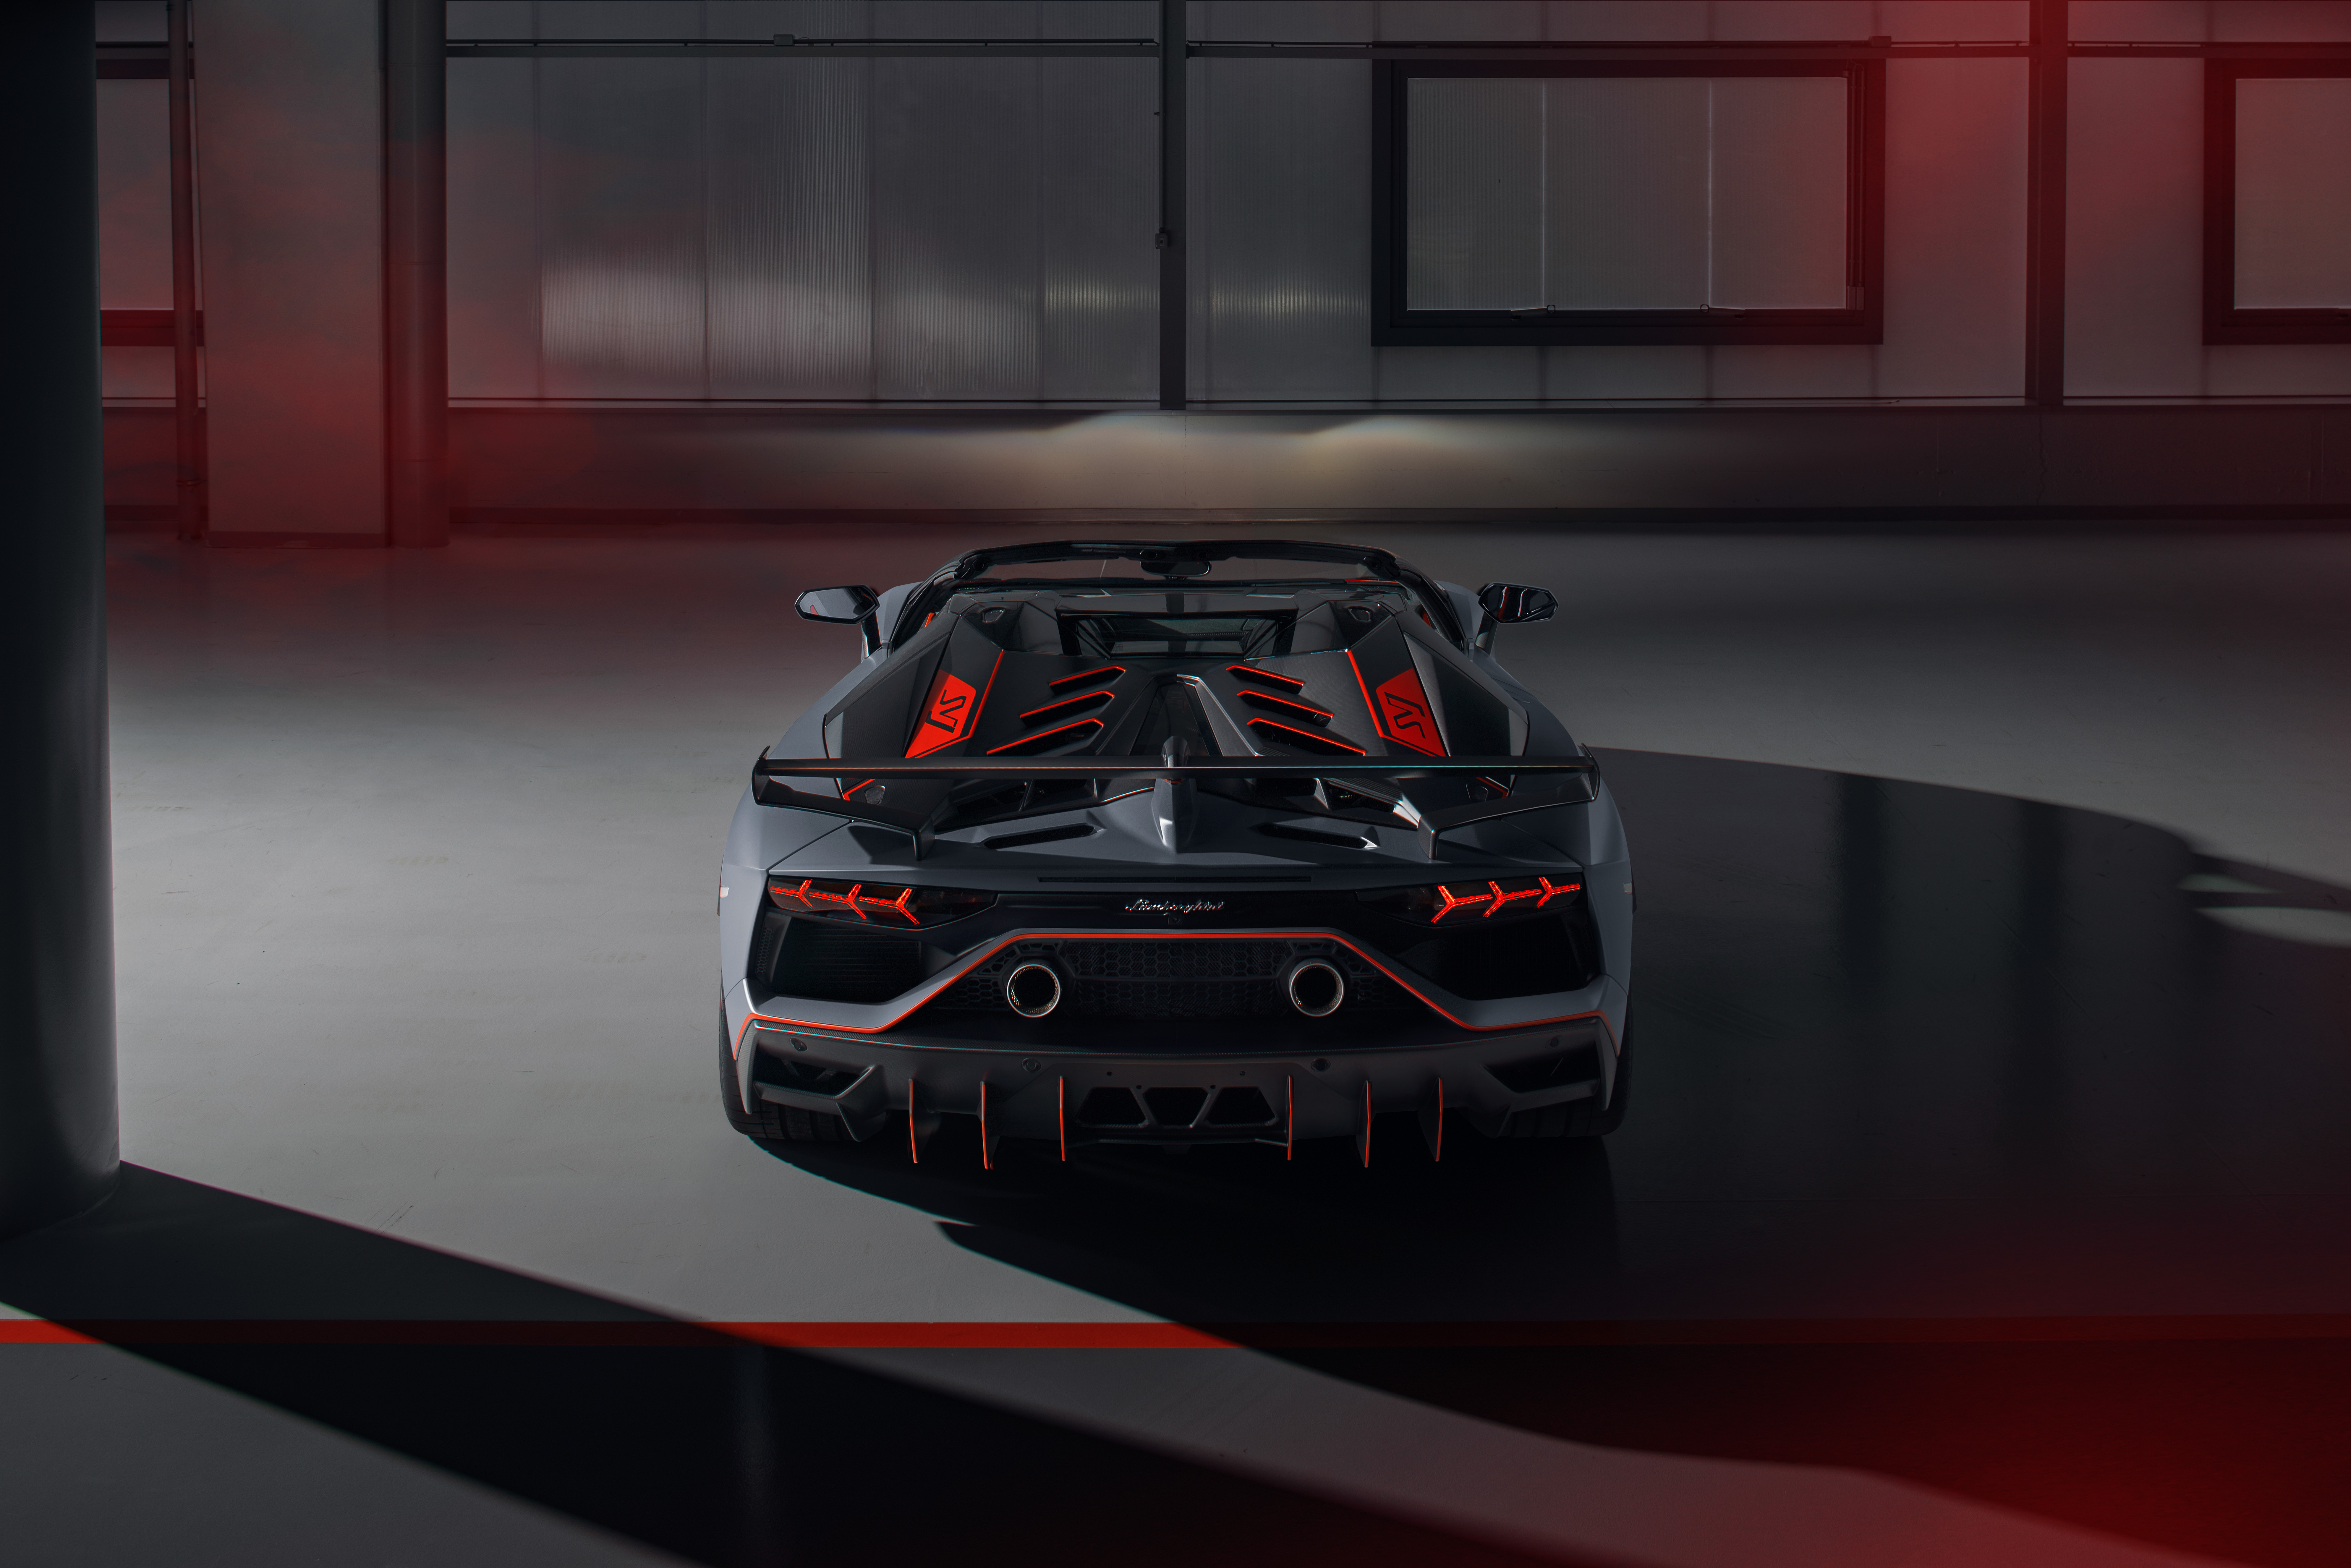 2020 Lamborghini Aventador SVJ 63 Roadster Rear View, HD Cars, 4k